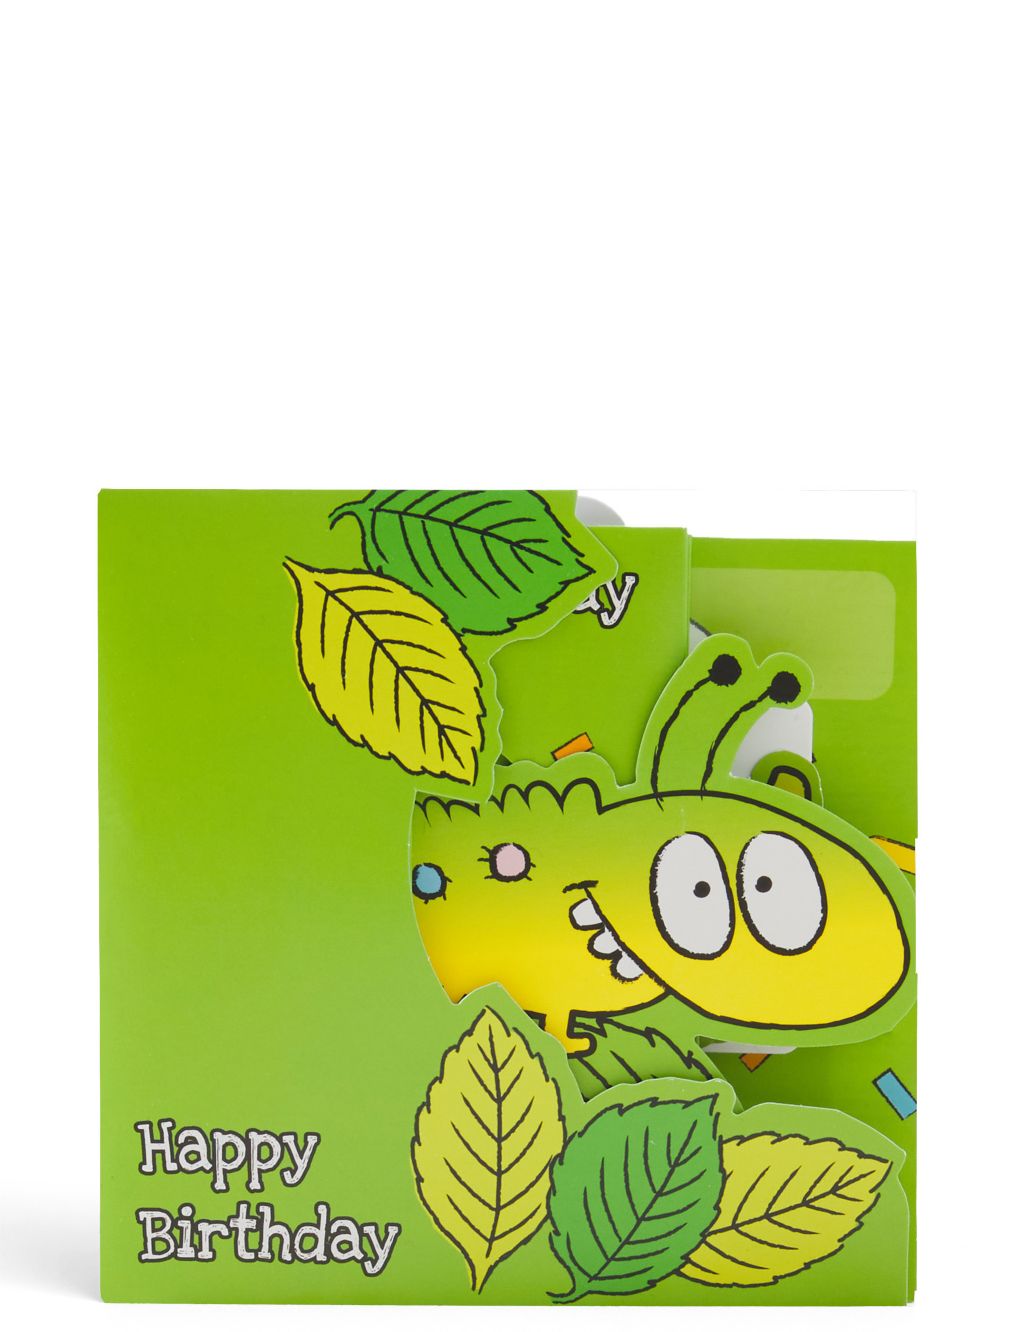 Colin the Caterpillar™ 3D pop out Gift Card